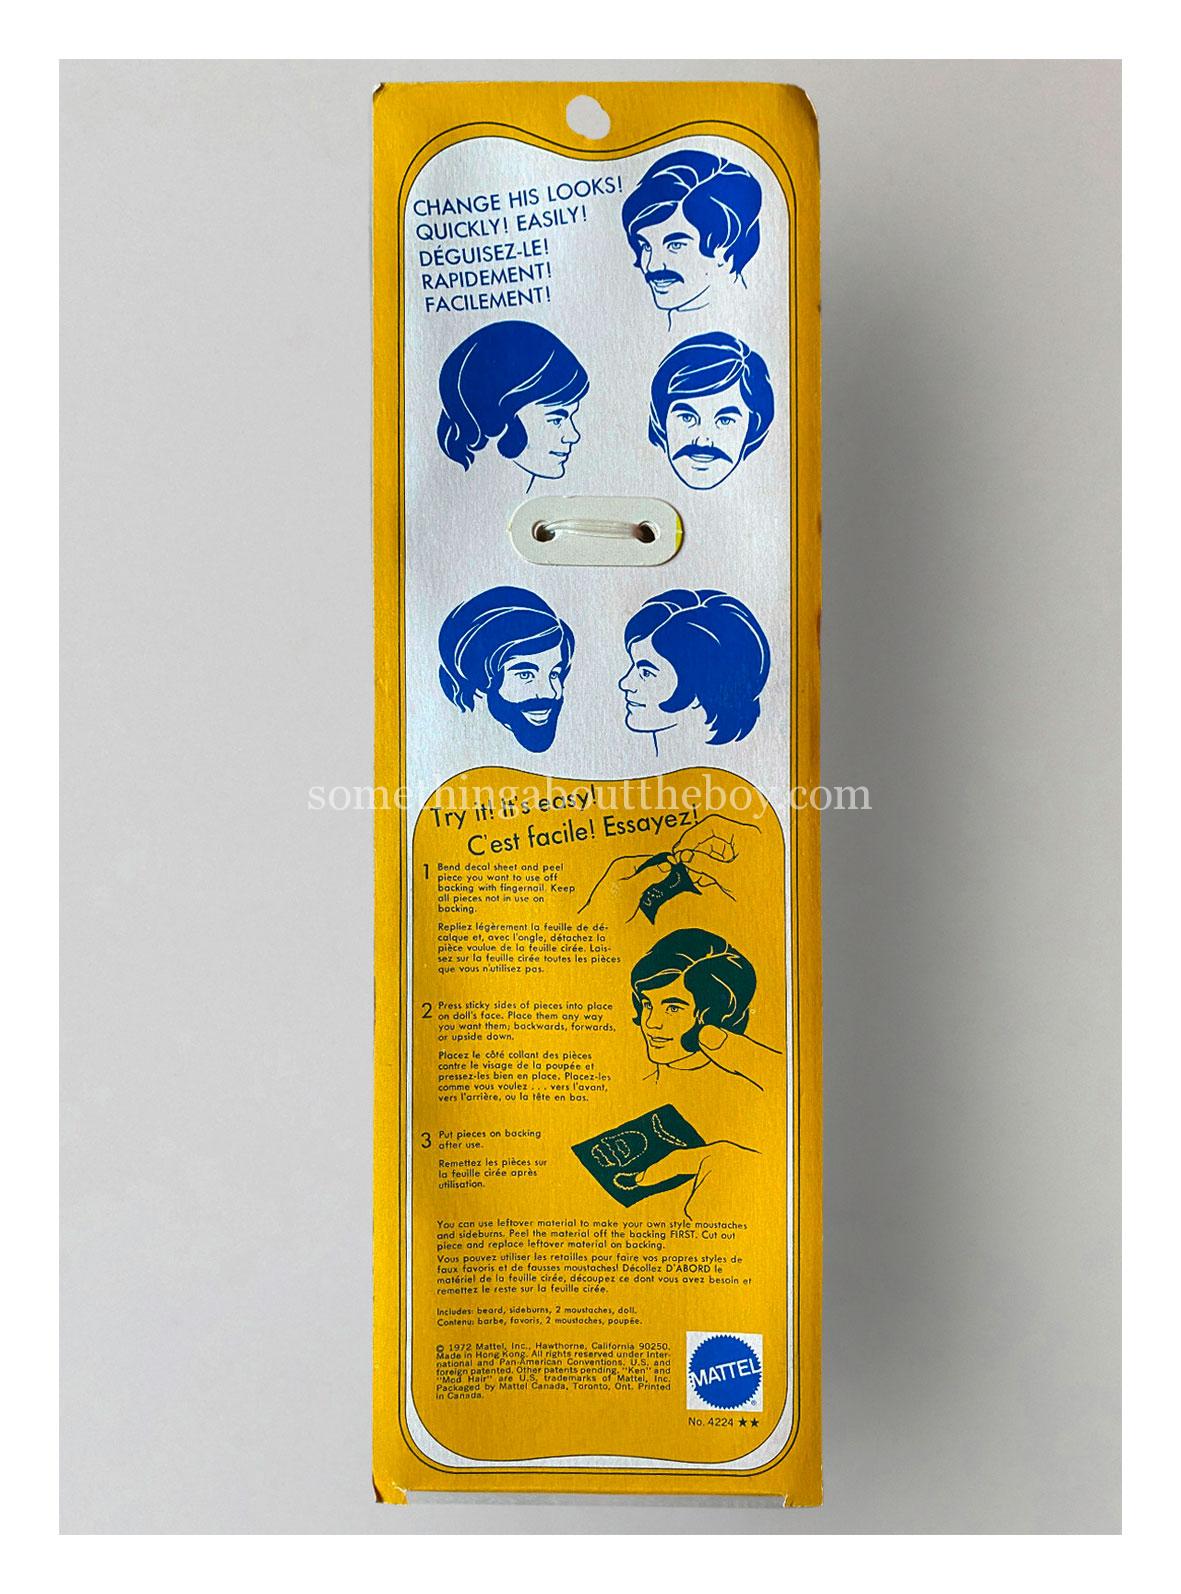 1973 #4224 Mod Hair Ken Canadian packaging (Made in Hong Kong)